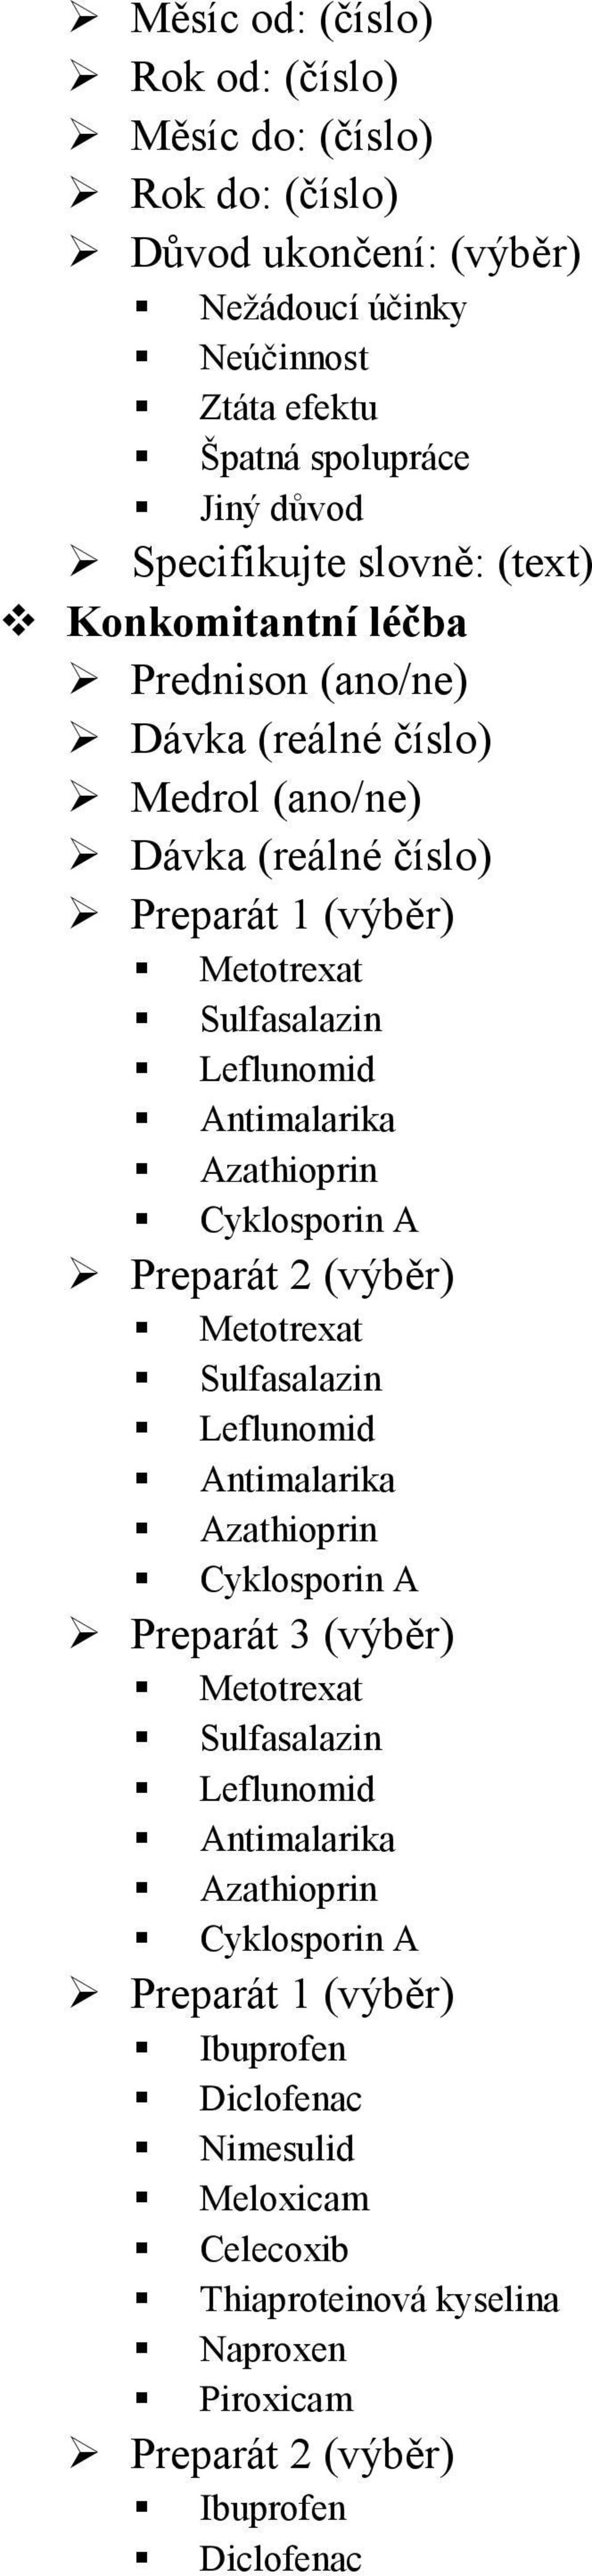 Azathioprin Cyklosporin A Preparát 2 (výběr) Metotrexat Sulfasalazin Leflunomid Antimalarika Azathioprin Cyklosporin A Preparát 3 (výběr) Metotrexat Sulfasalazin Leflunomid